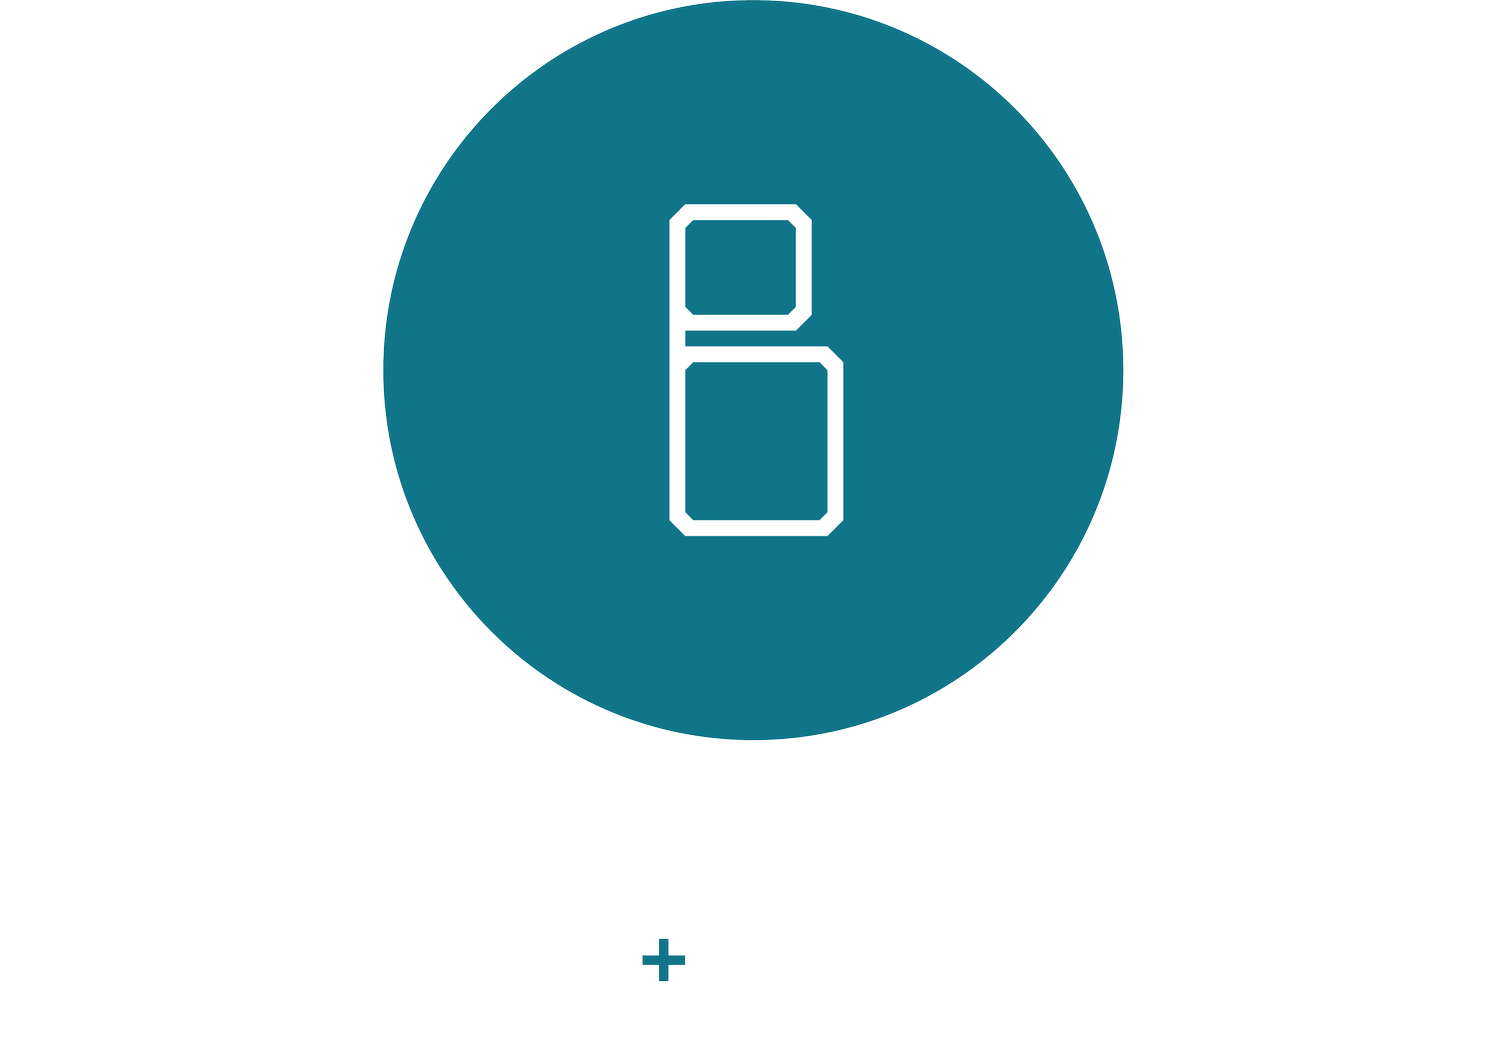 Byzick and Company